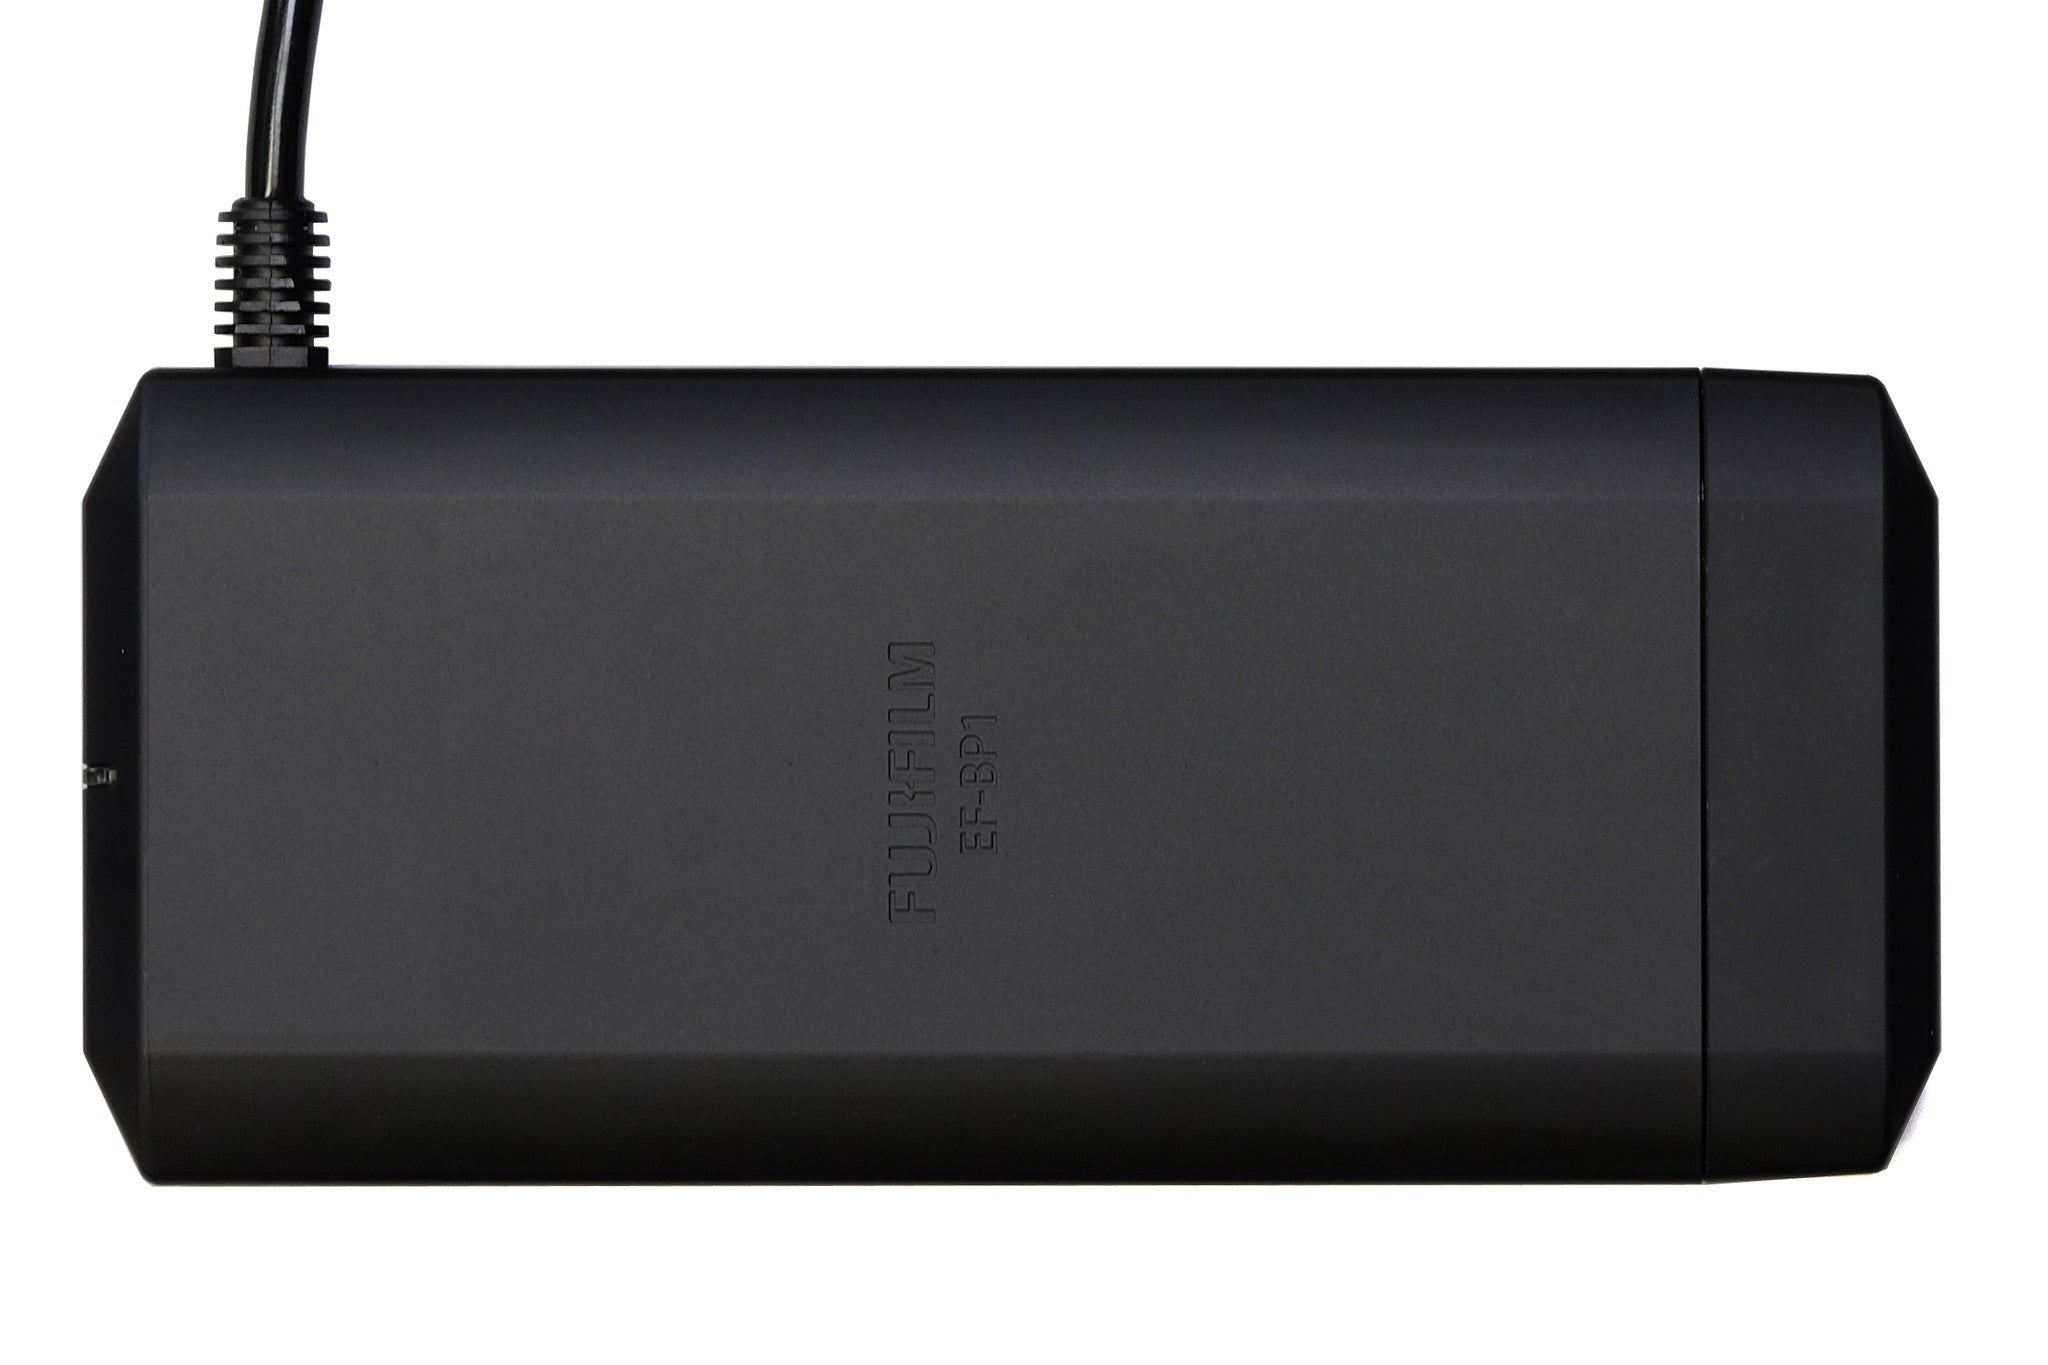 Fujifilm EF-BP1 Battery Pack for EF-X500 Flash, lighting hot shoe flashes, Fujifilm - Pictureline 